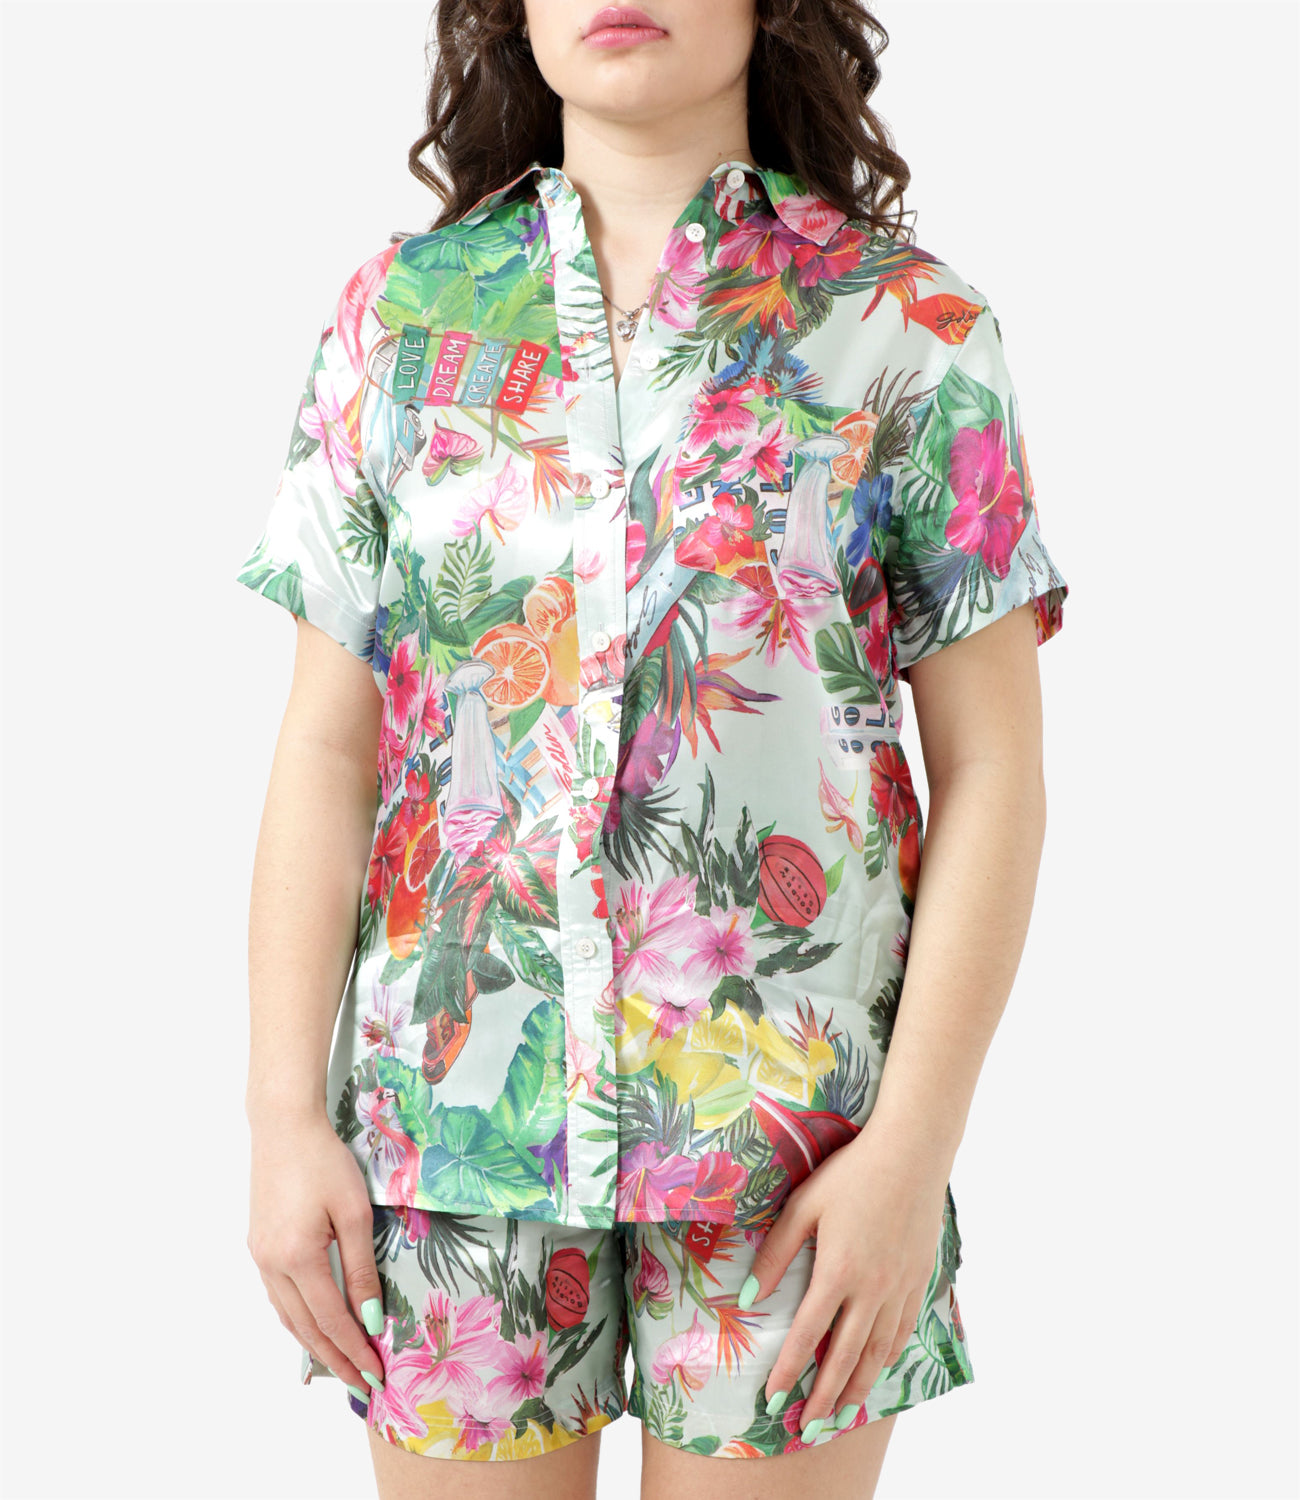 Golden Goose Deluxe Brand | Camicia Jorney Shirt Clarissa/ Miami Tropical Multicolor